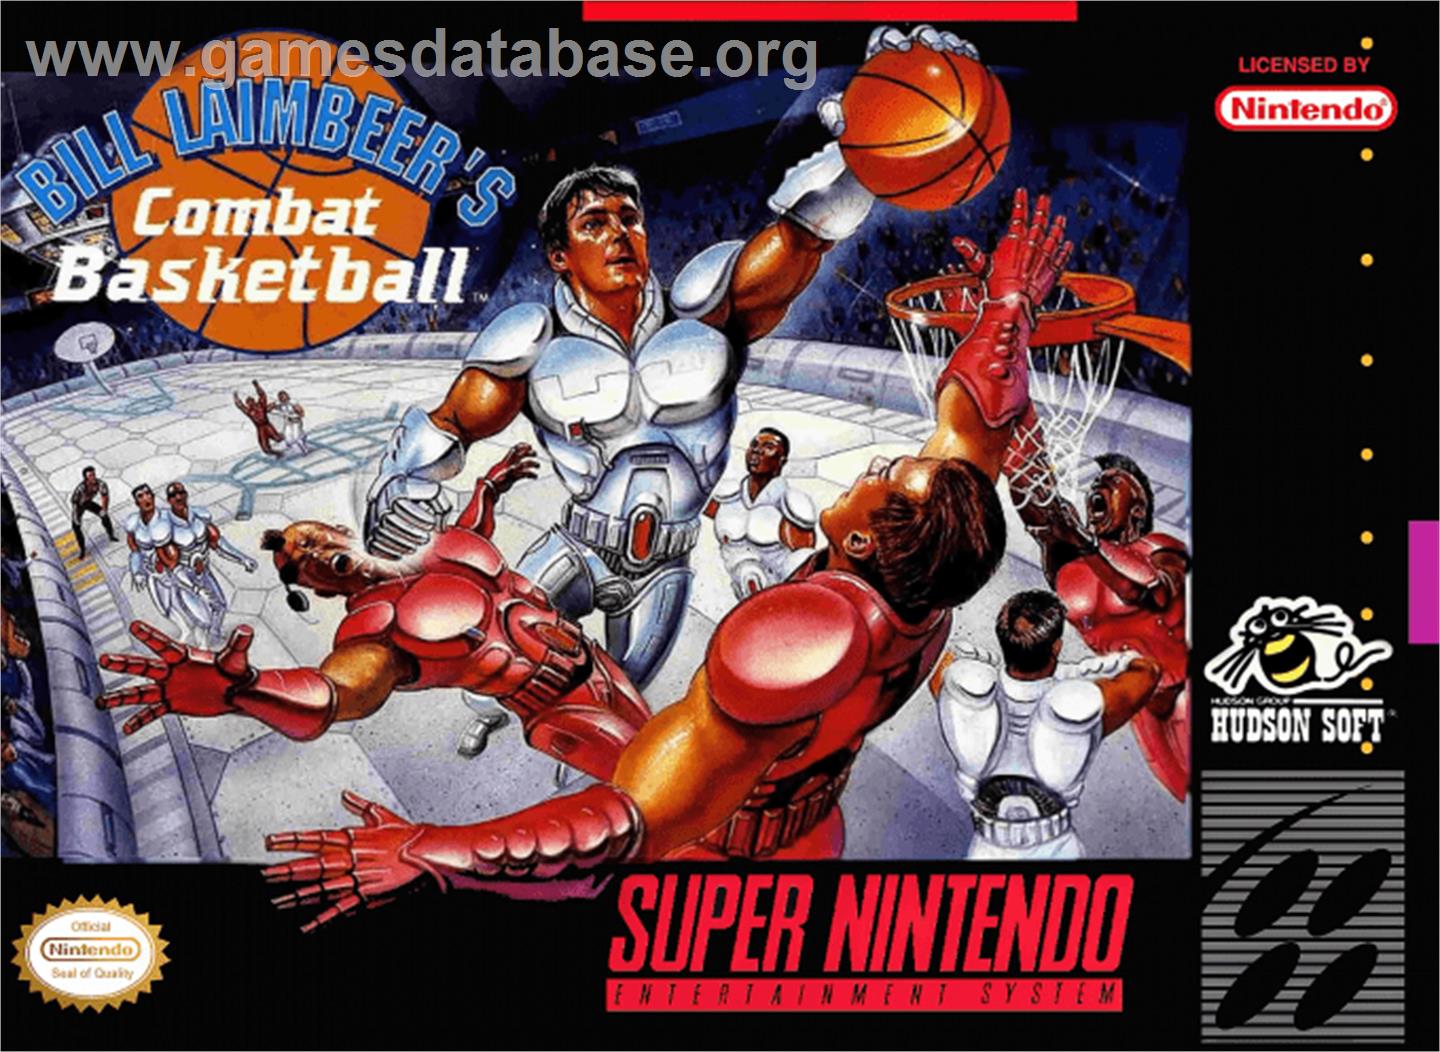 Bill Laimbeer's Combat Basketball - Nintendo SNES - Artwork - Box